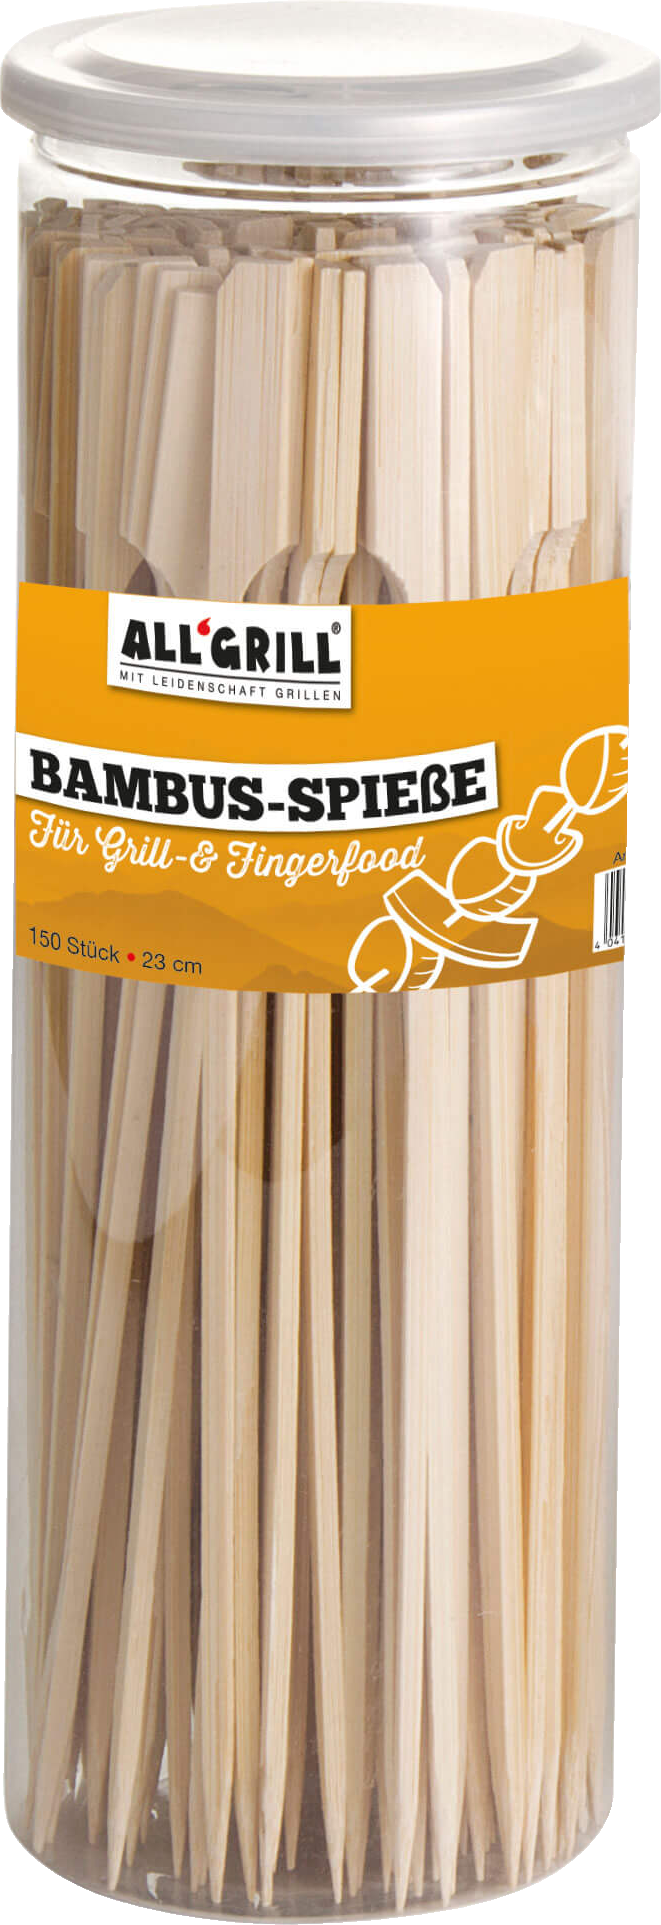 ALL’GRILL Bambus Spieße, 150Stk. 23cm